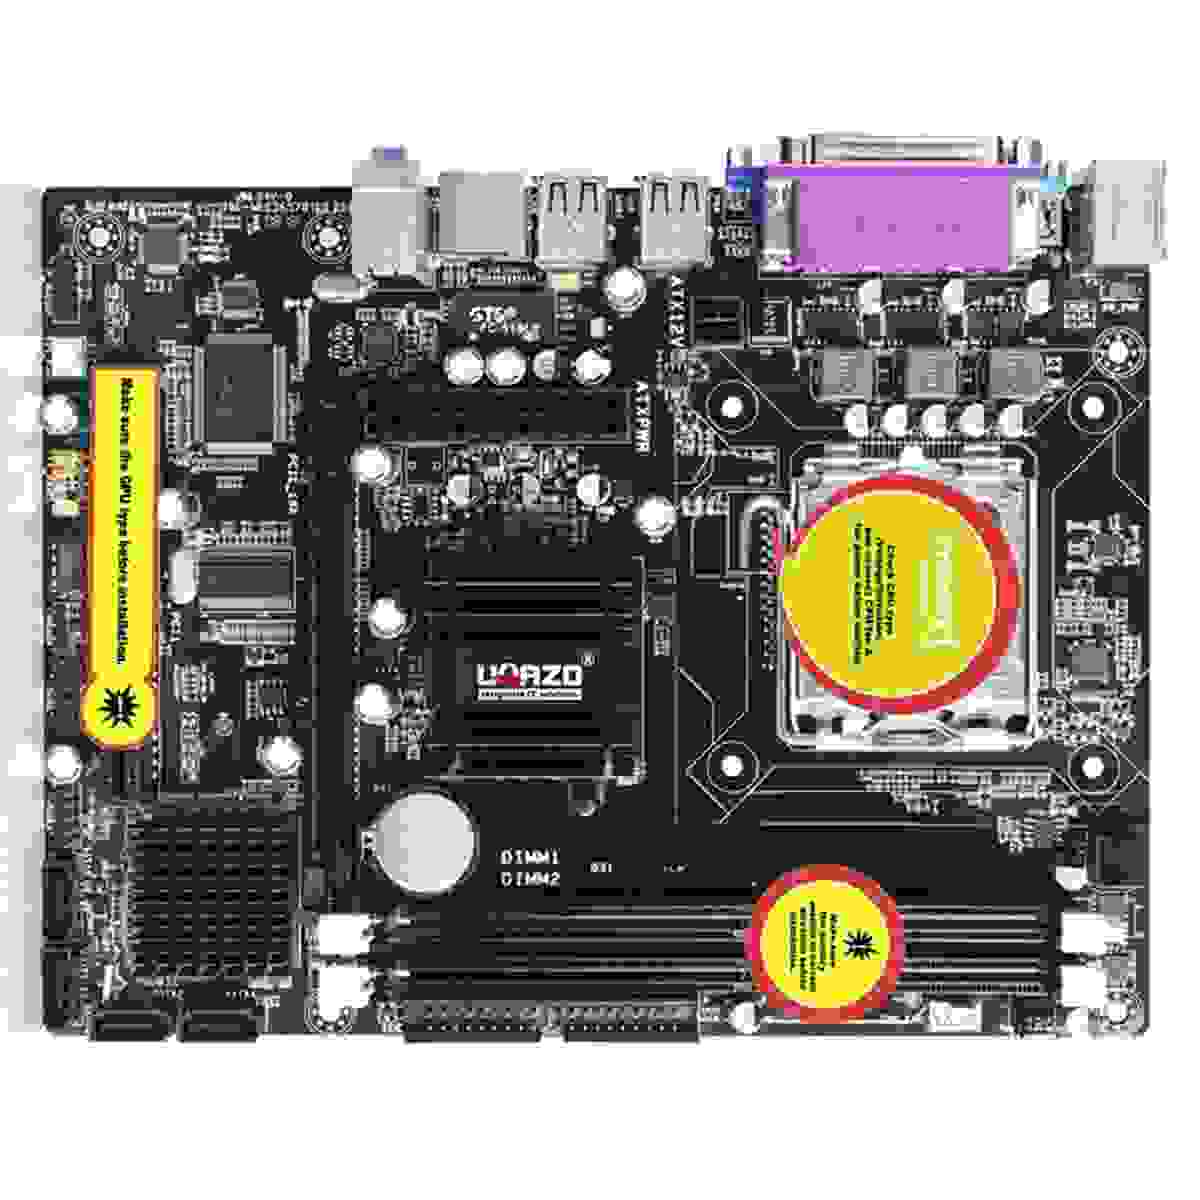 UQAZO G31 Intel Chipset HIGH QUALITY WITH LPT PORT Desktop Mothboard